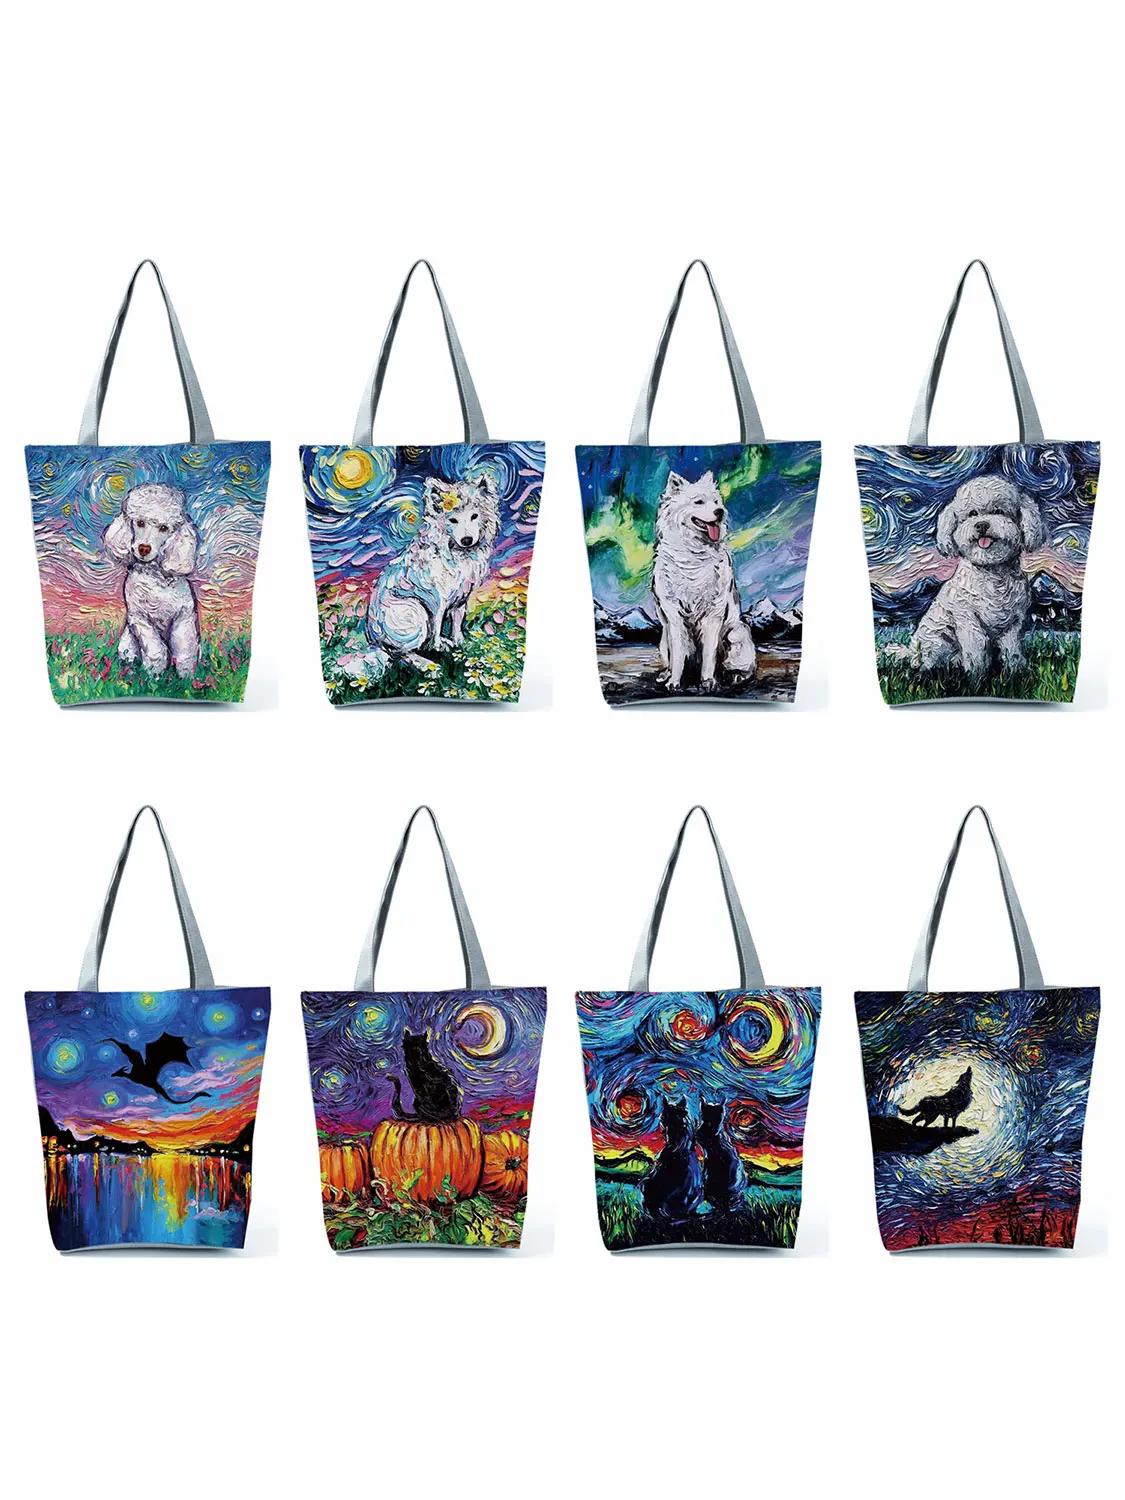 

New Starry Sky Animal Dog Printed Handbag Shoulder Bag Women's Large Tote Ladies Casual Leisure Shopping Hand Bag Outdoor Packs